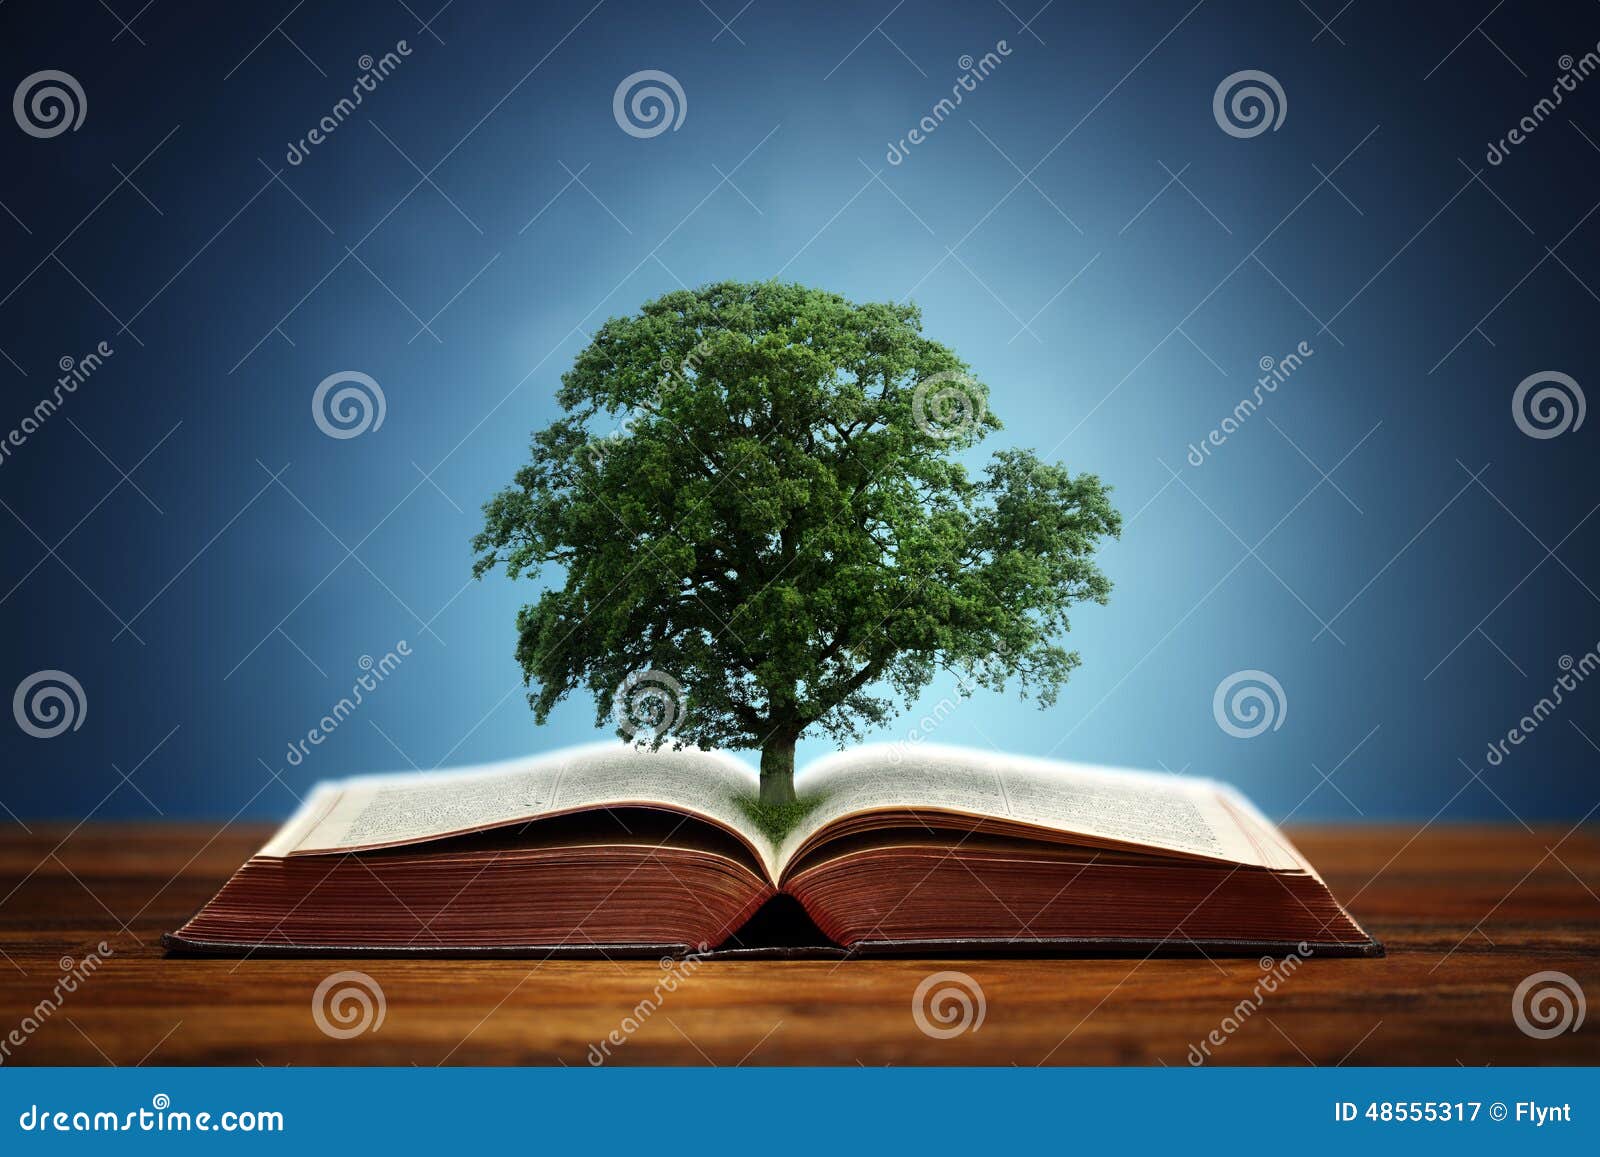 tree of knowledge